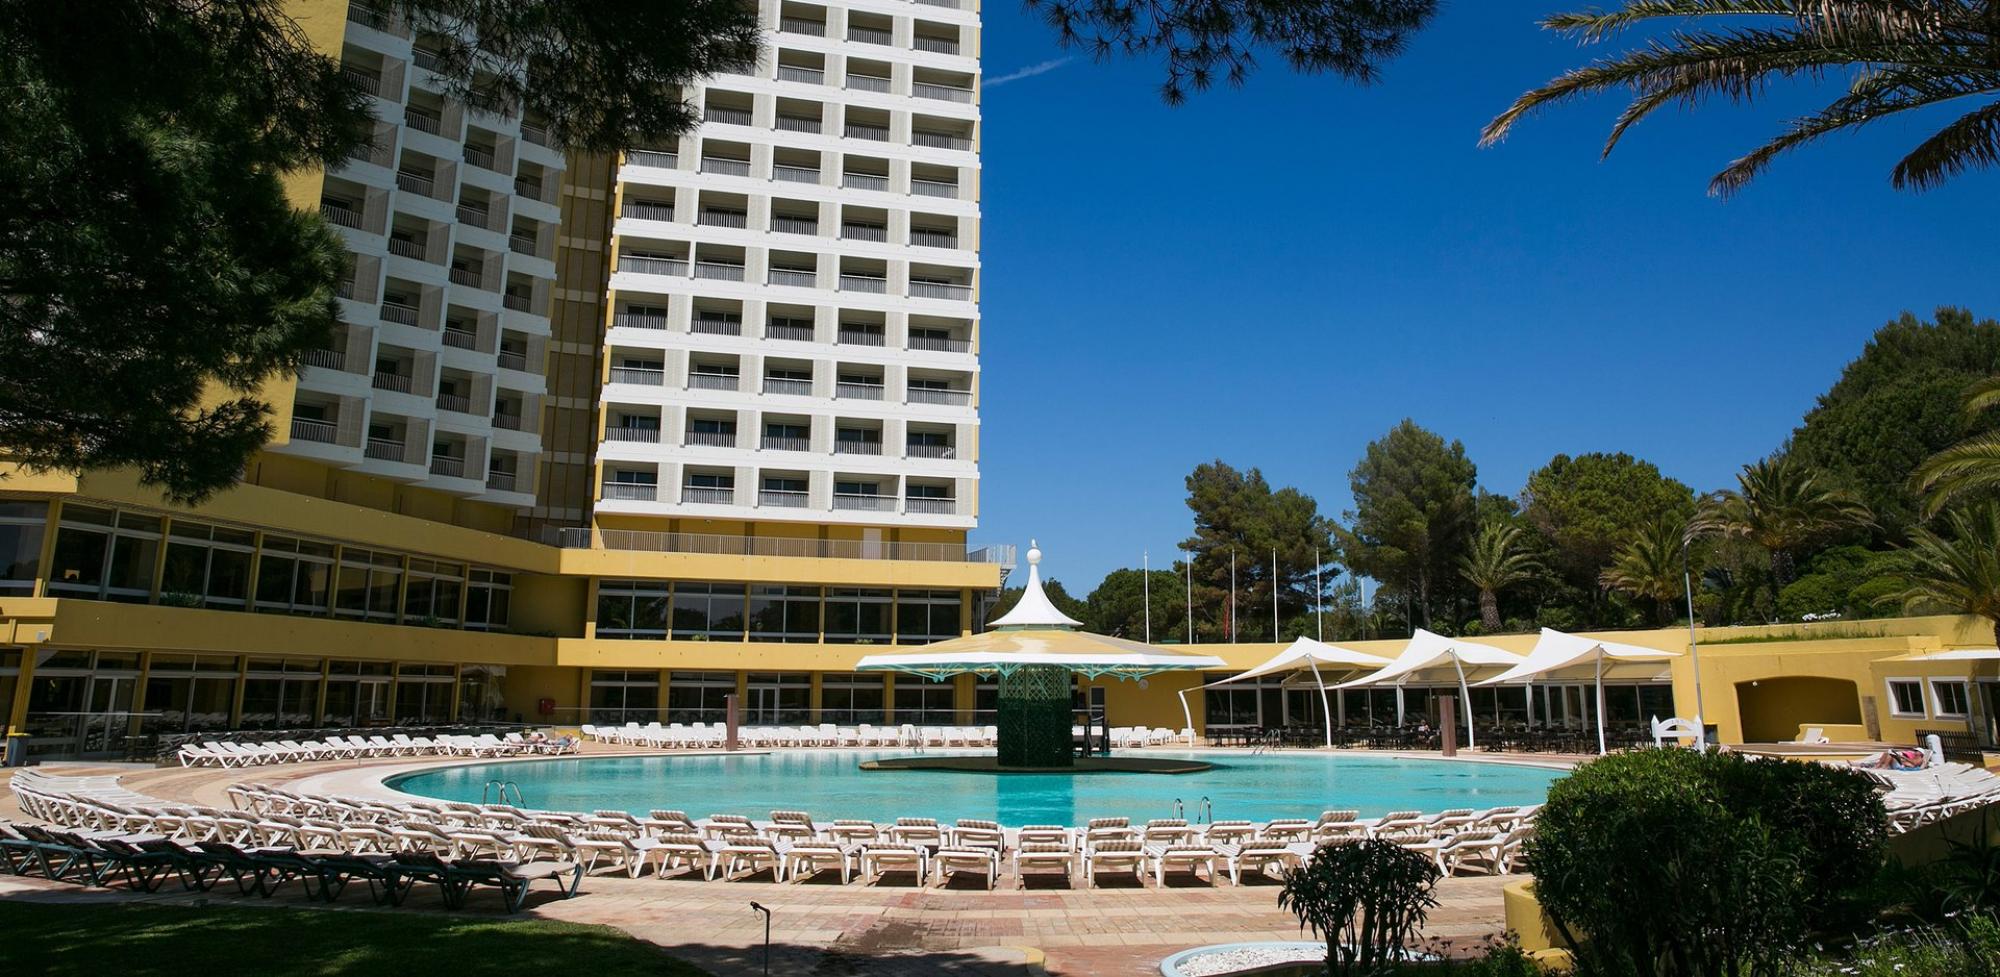 The Pestana Delfim Hotel's impressive outdoor pool situated in vibrant Algarve.